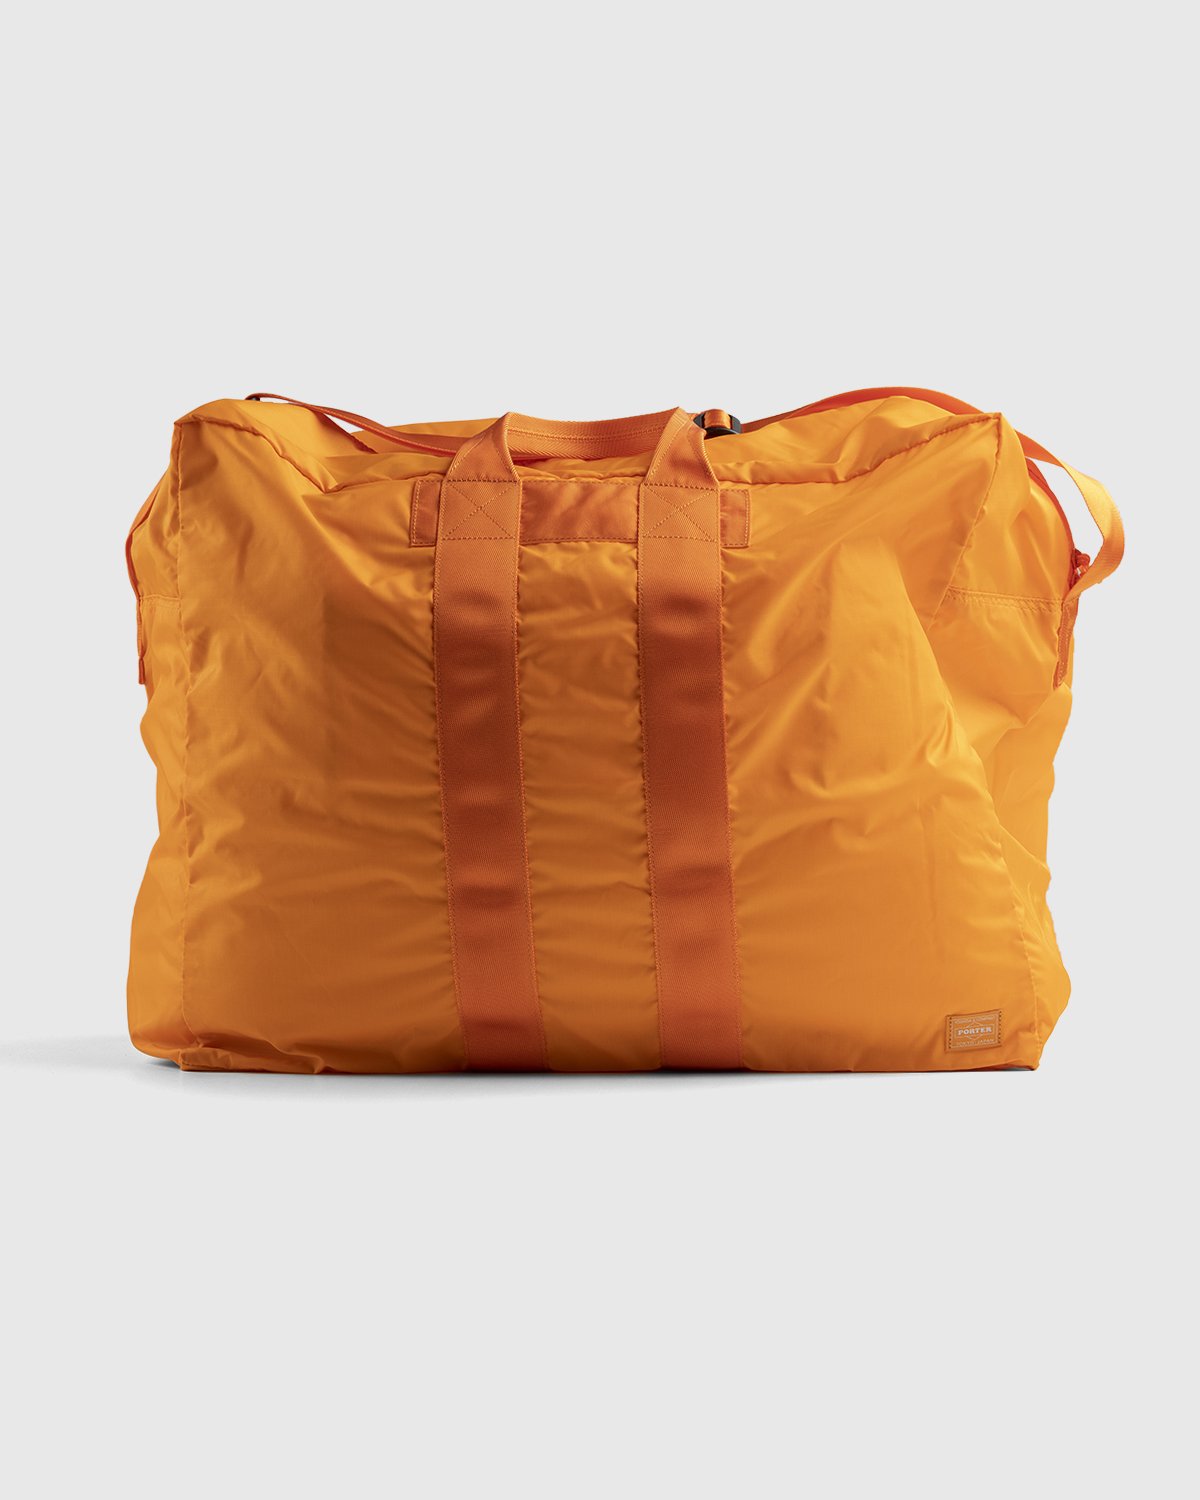 Porter-Yoshida & Co. - Flex 2-Way Duffle Bag Orange - Accessories - Orange - Image 1